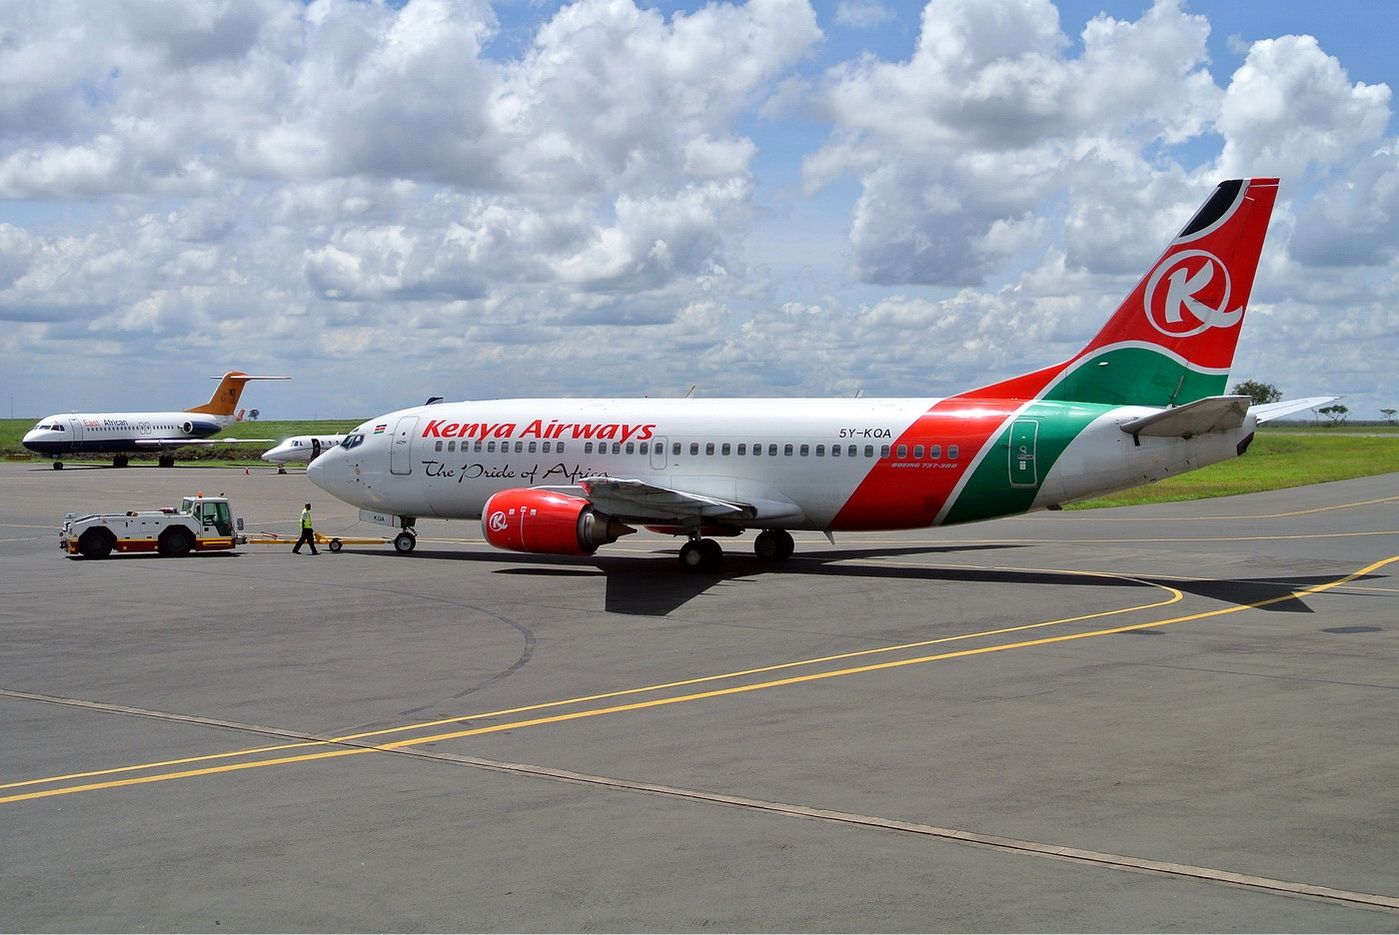 Kenya Airways Boeing 737-300 on auction